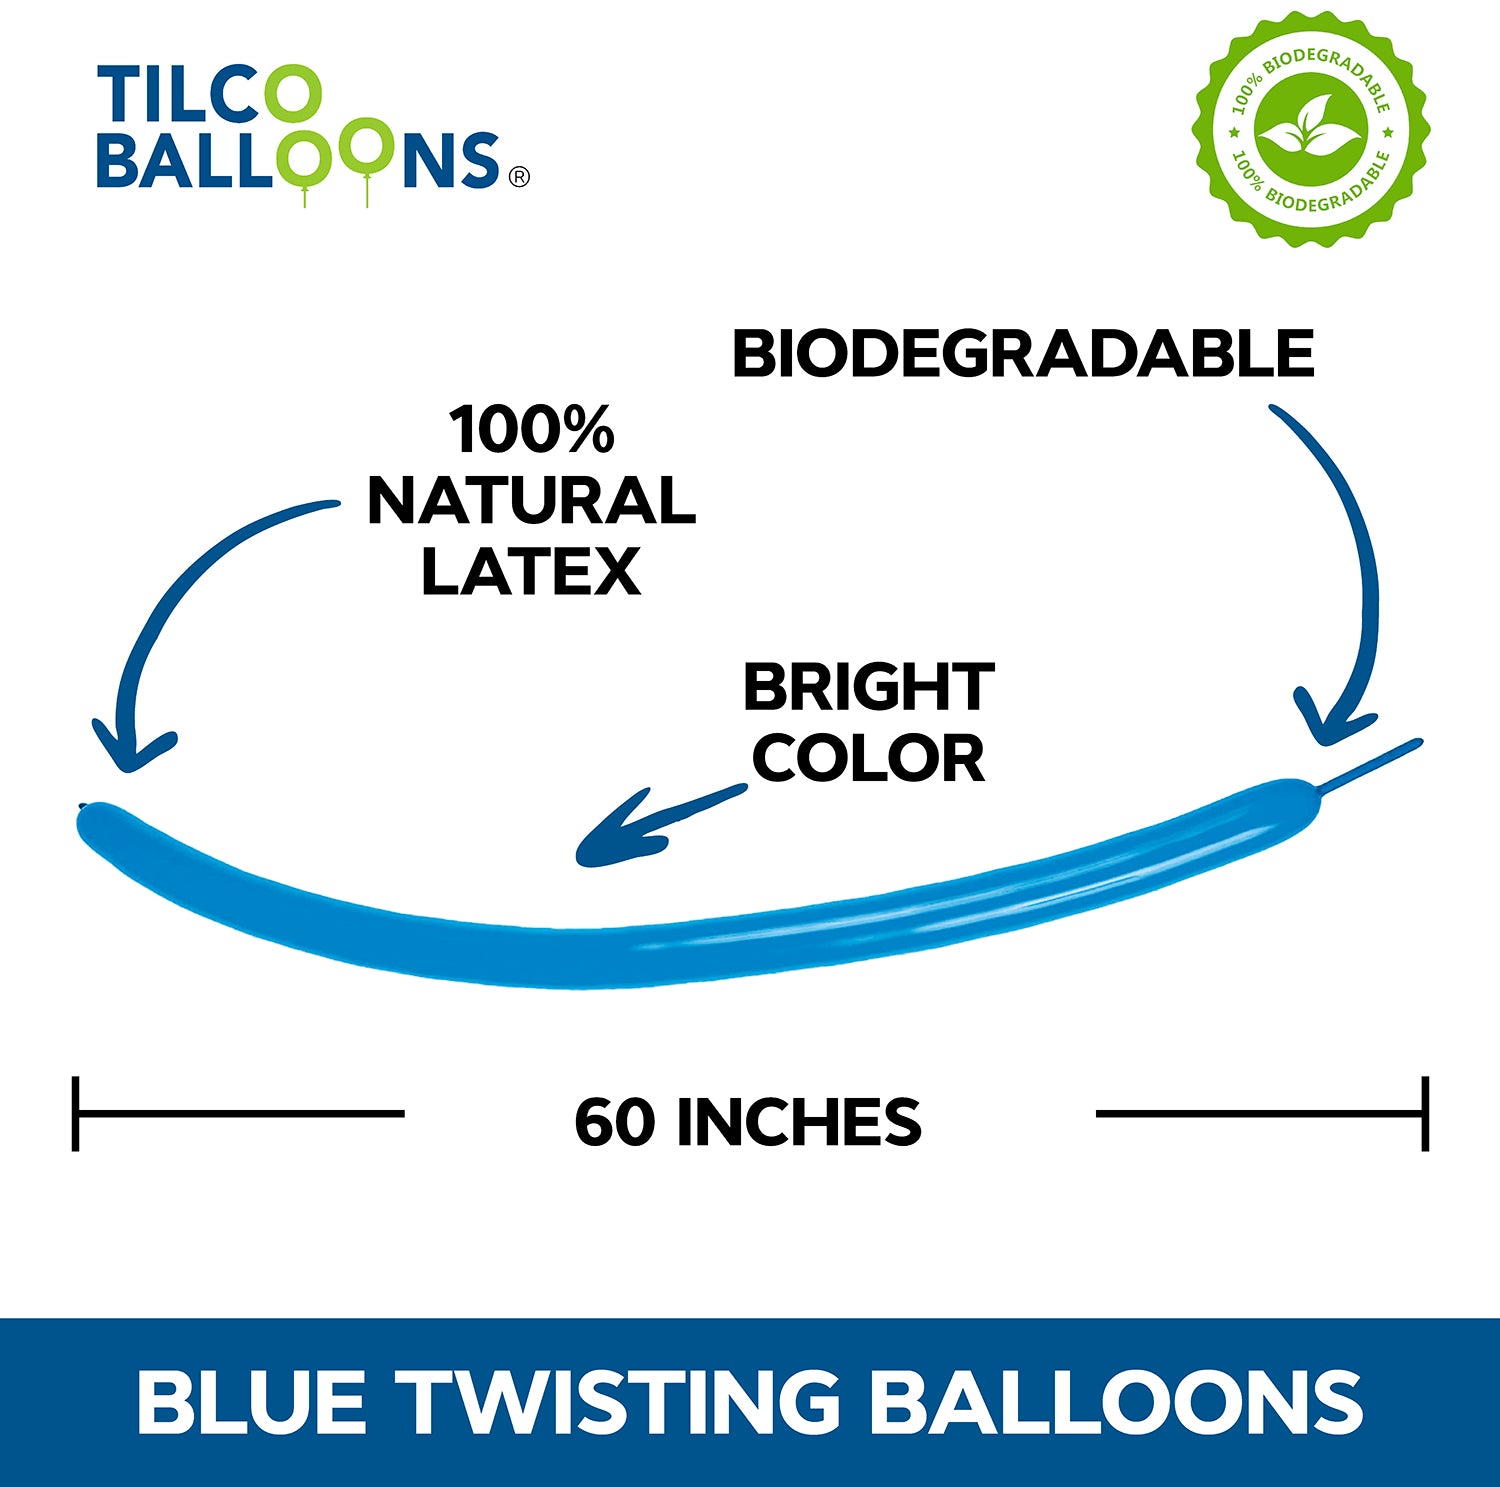 260 Royal Blue Twisting Balloon Description